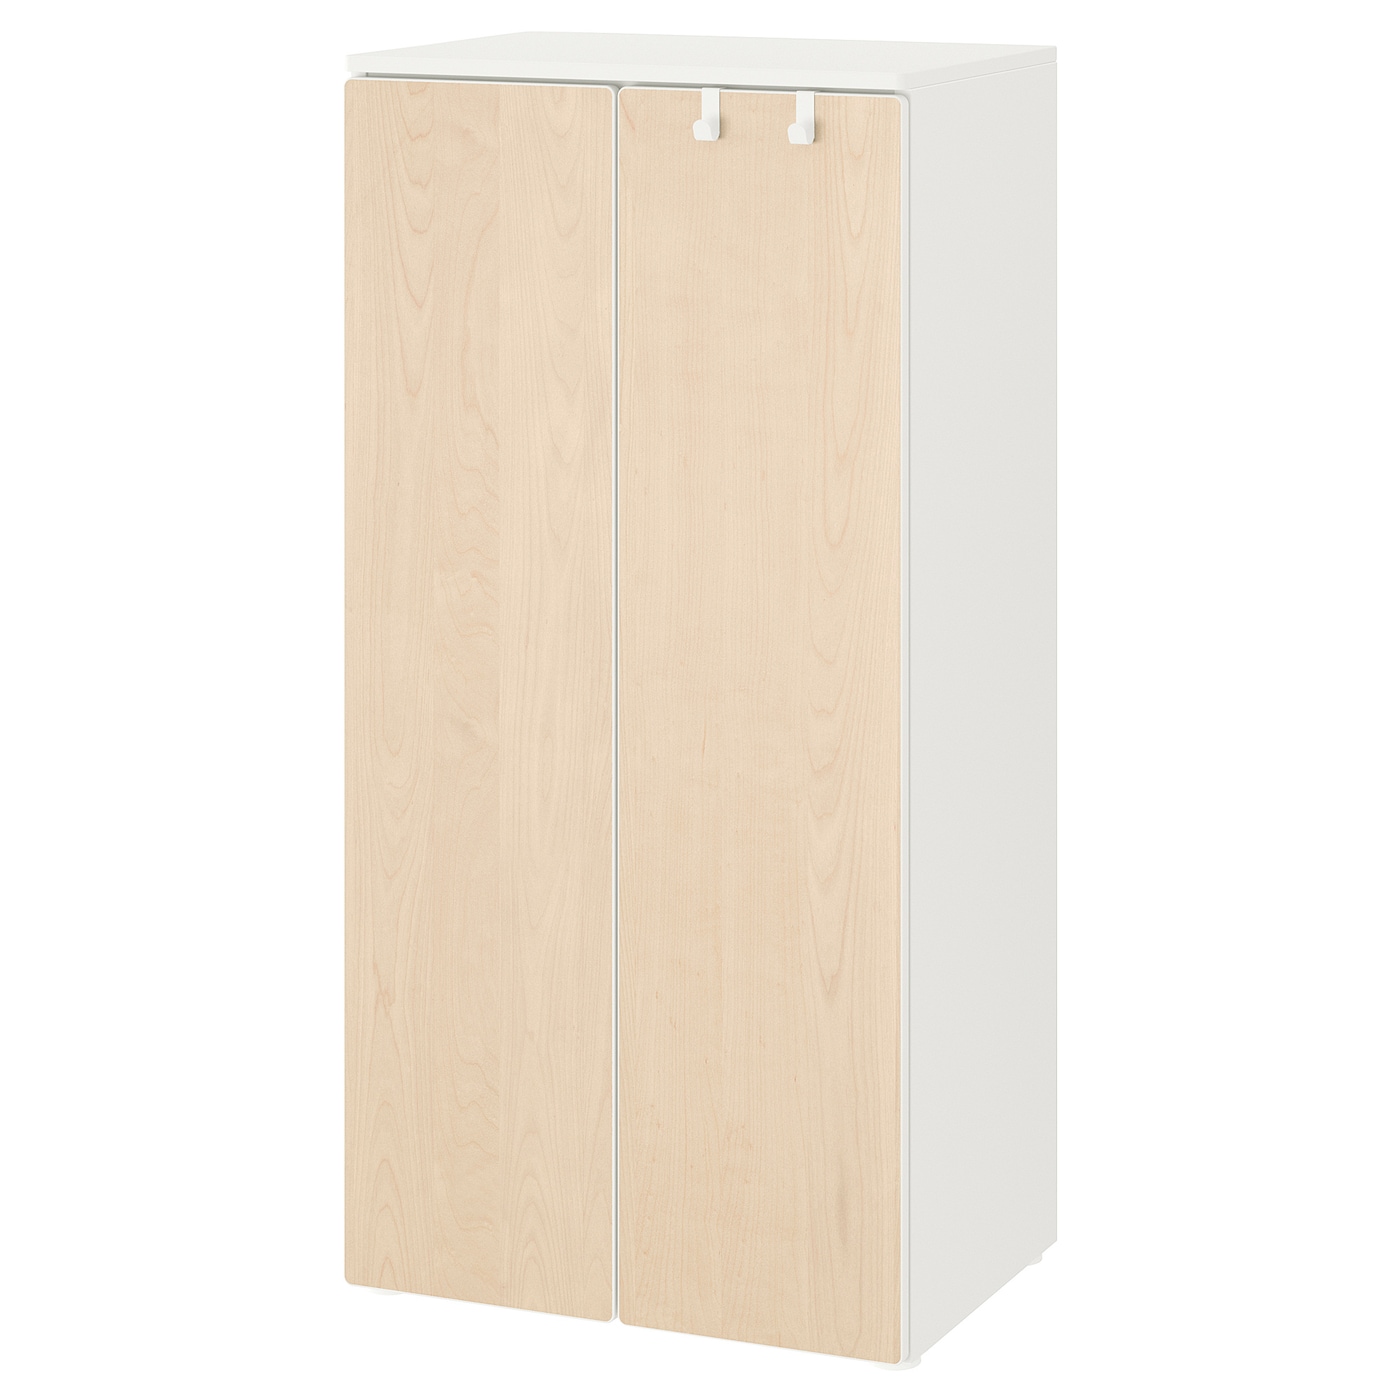 Шкаф детский - IKEA PLATSA/SMÅSTAD/SMASTAD, 60x40x123 см, белый/светло-коричневый, ИКЕА